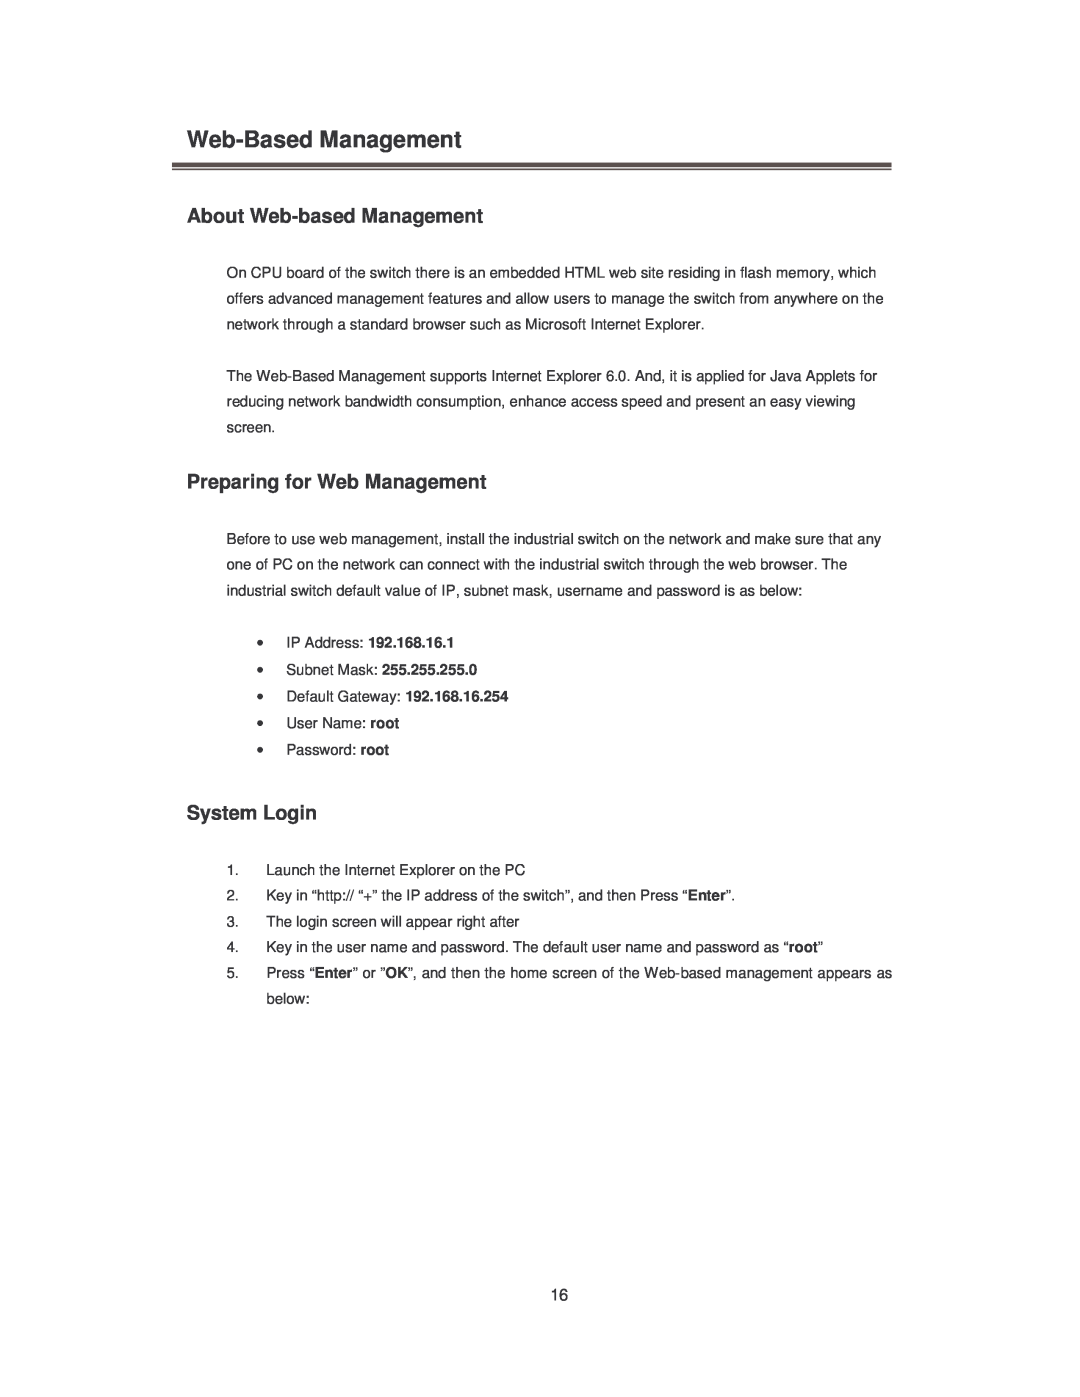 Transition Networks SISTM10XX-162-LR Web-Based Management, About Web-based Management, Preparing for Web Management 